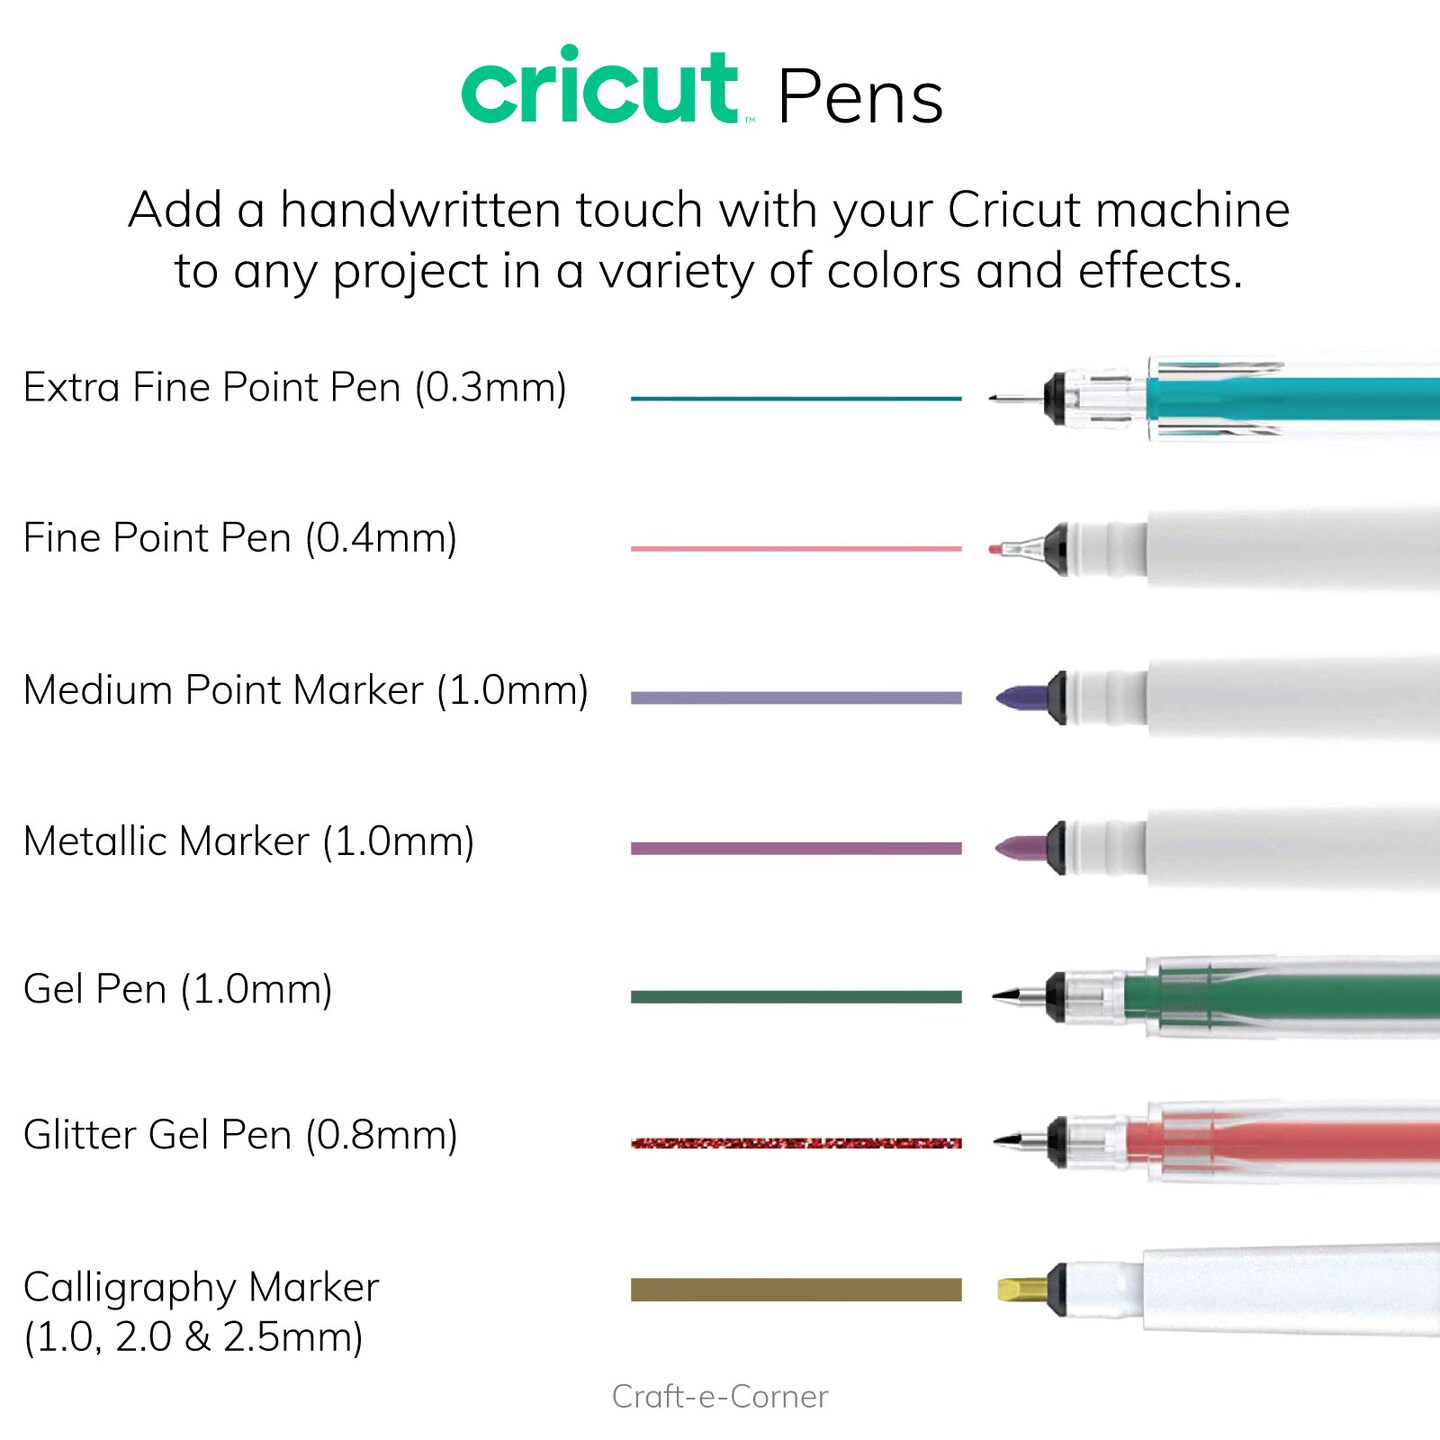 Cricut Joy Fine Point Pens, 0.4 mm (3) Black, Brown, Gray